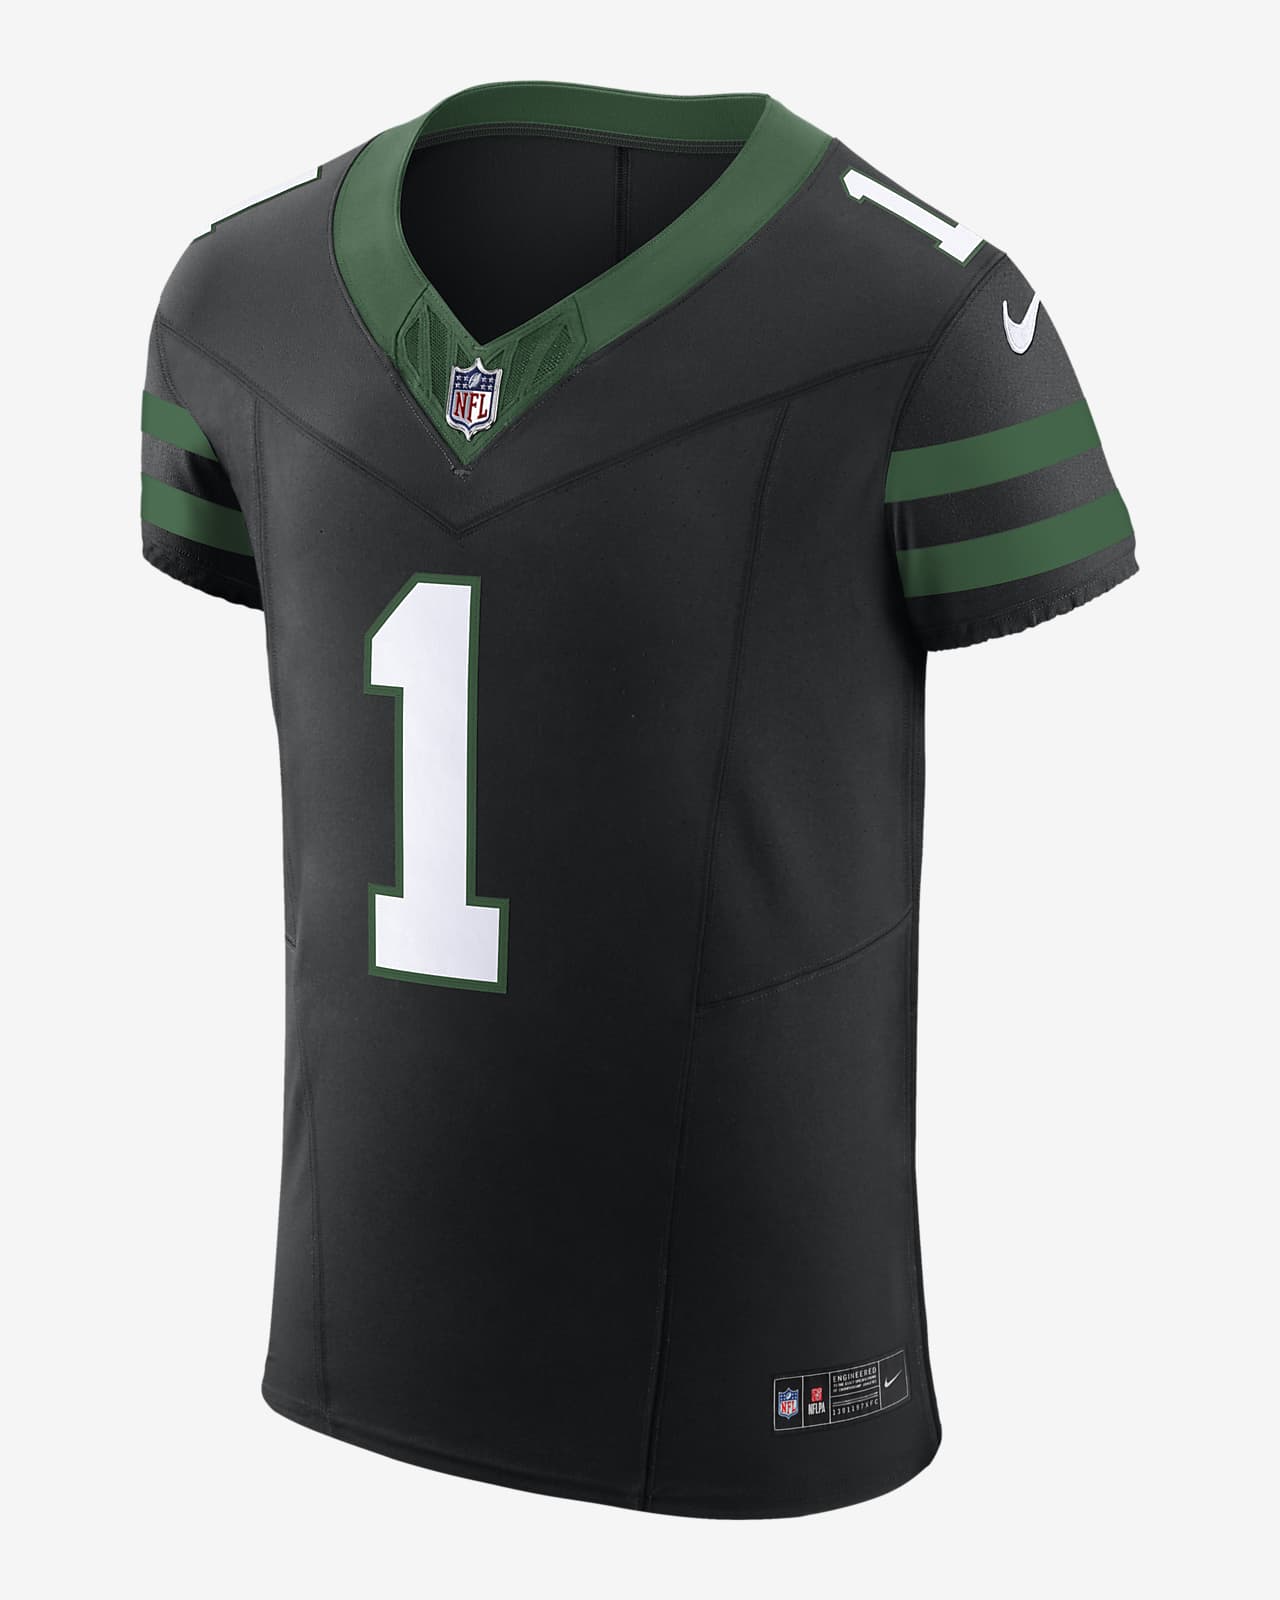 Jersey de fútbol americano Nike Dri-FIT de la NFL Elite para hombre Sauce Gardner New York Jets